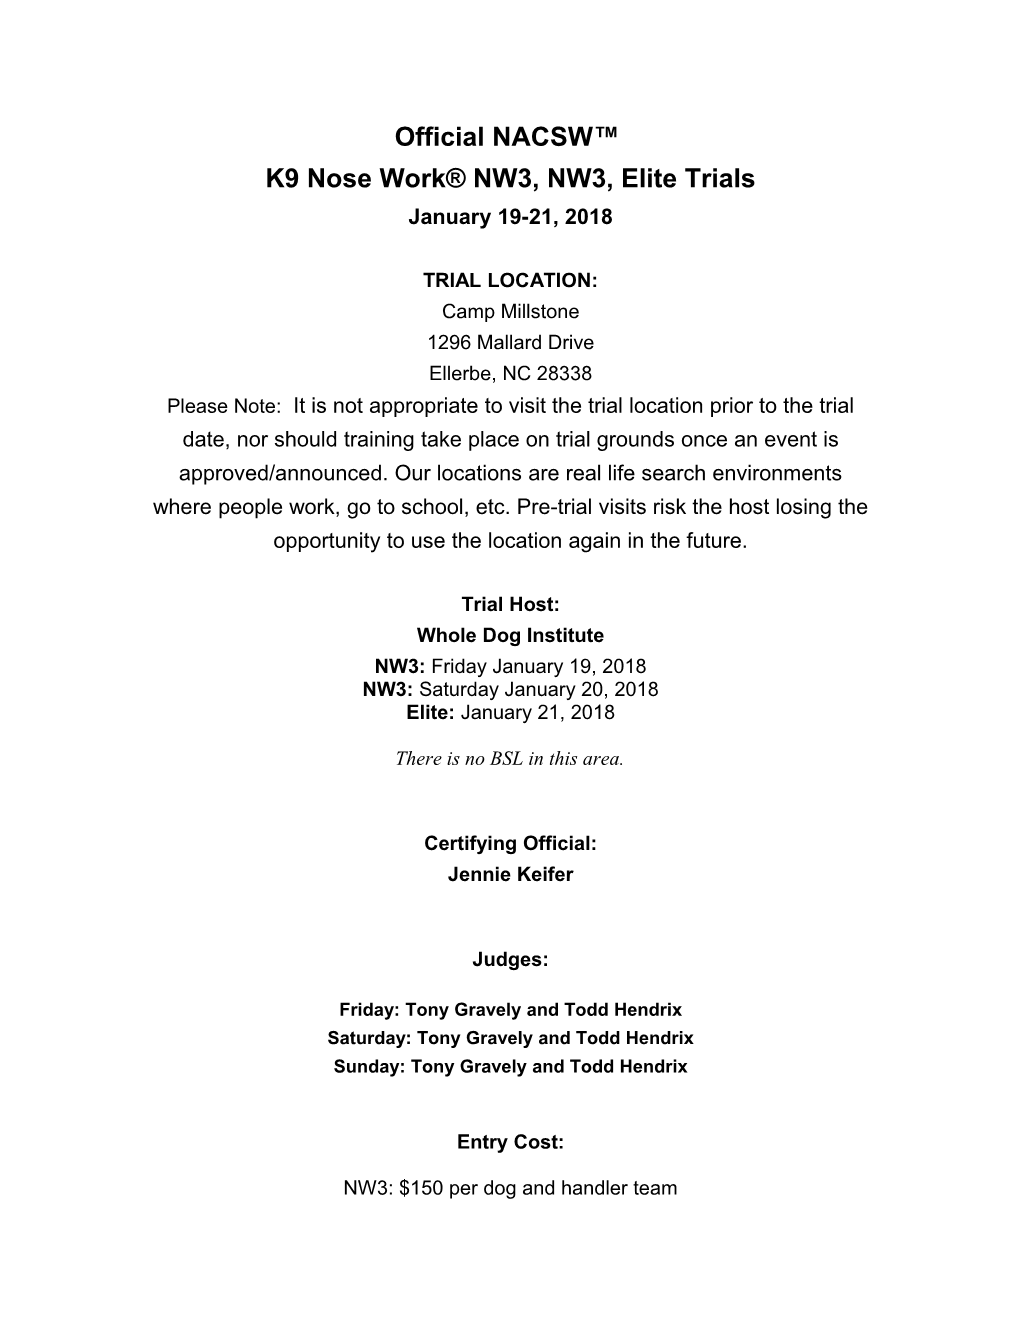 K9 Nose Work NW3, NW3, Elite Trials